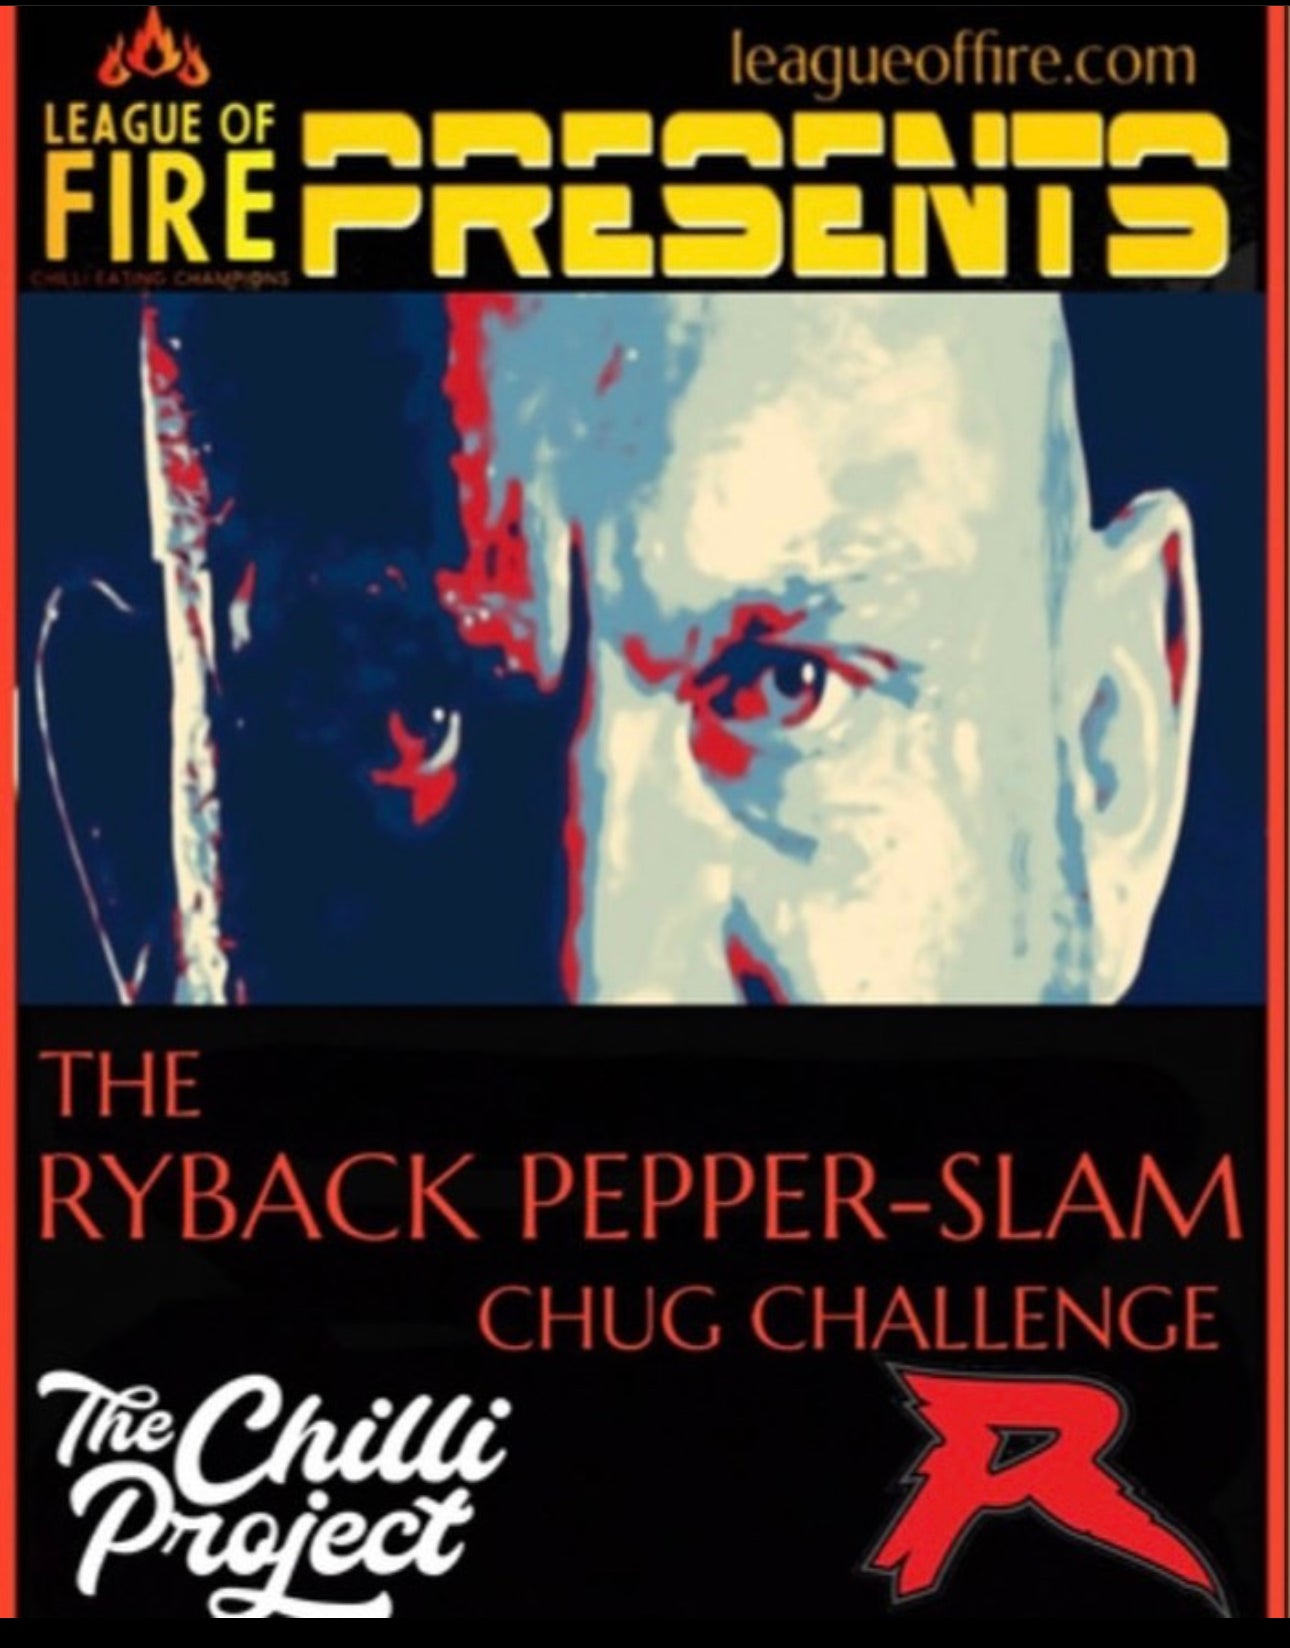 Ryback chug league of fire challenge